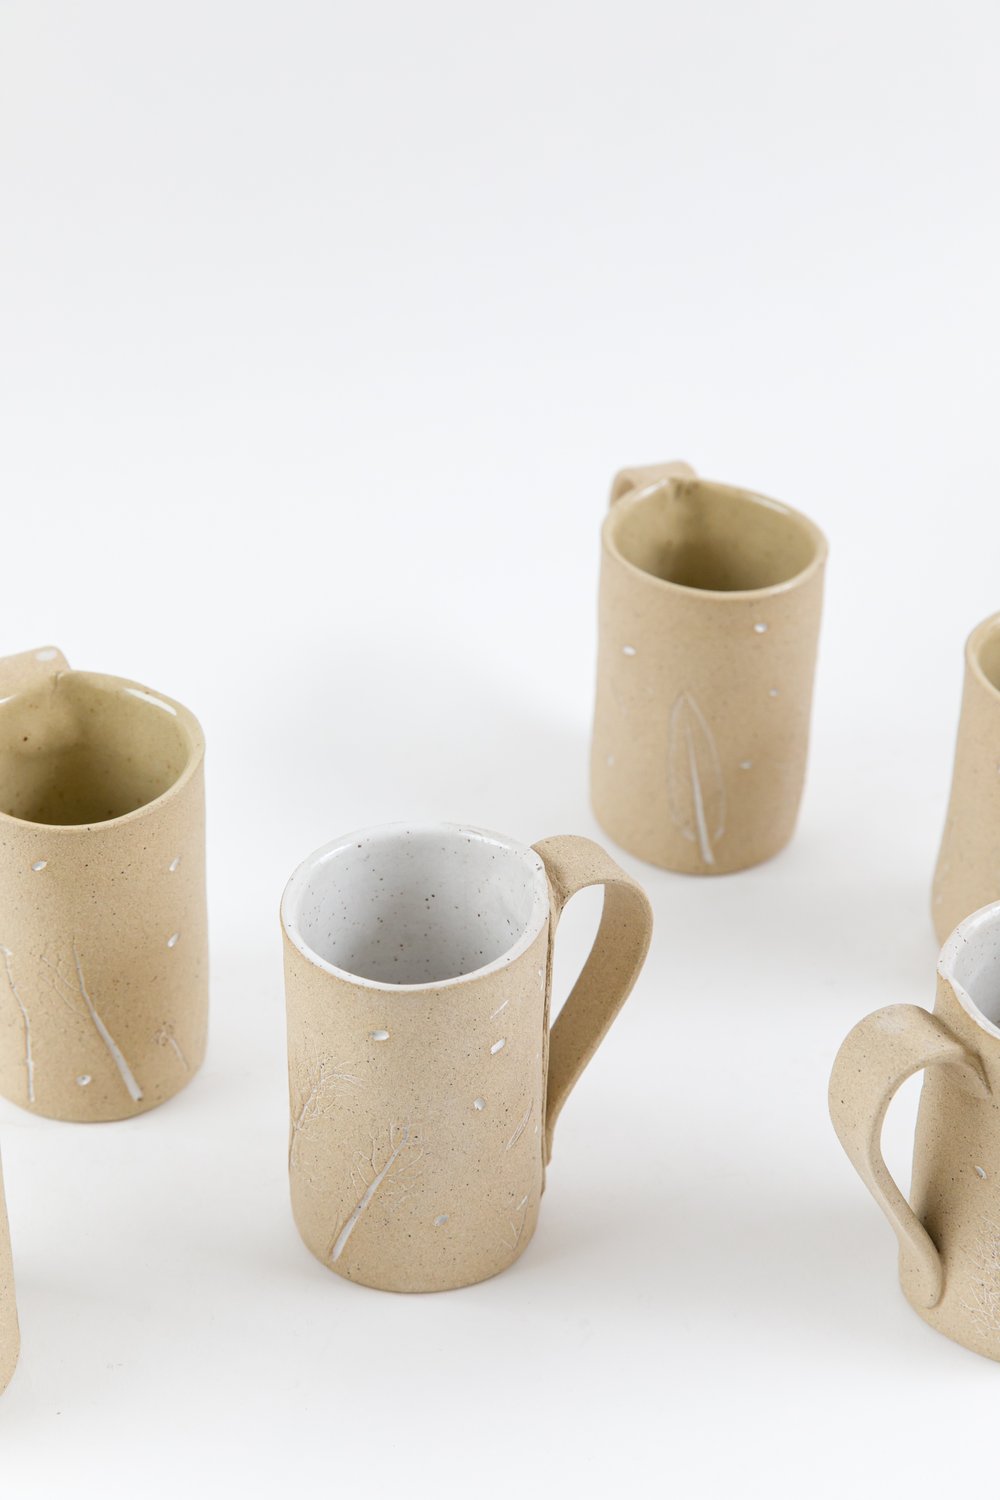 Image of Tall Garden Mugs - Tan Clay